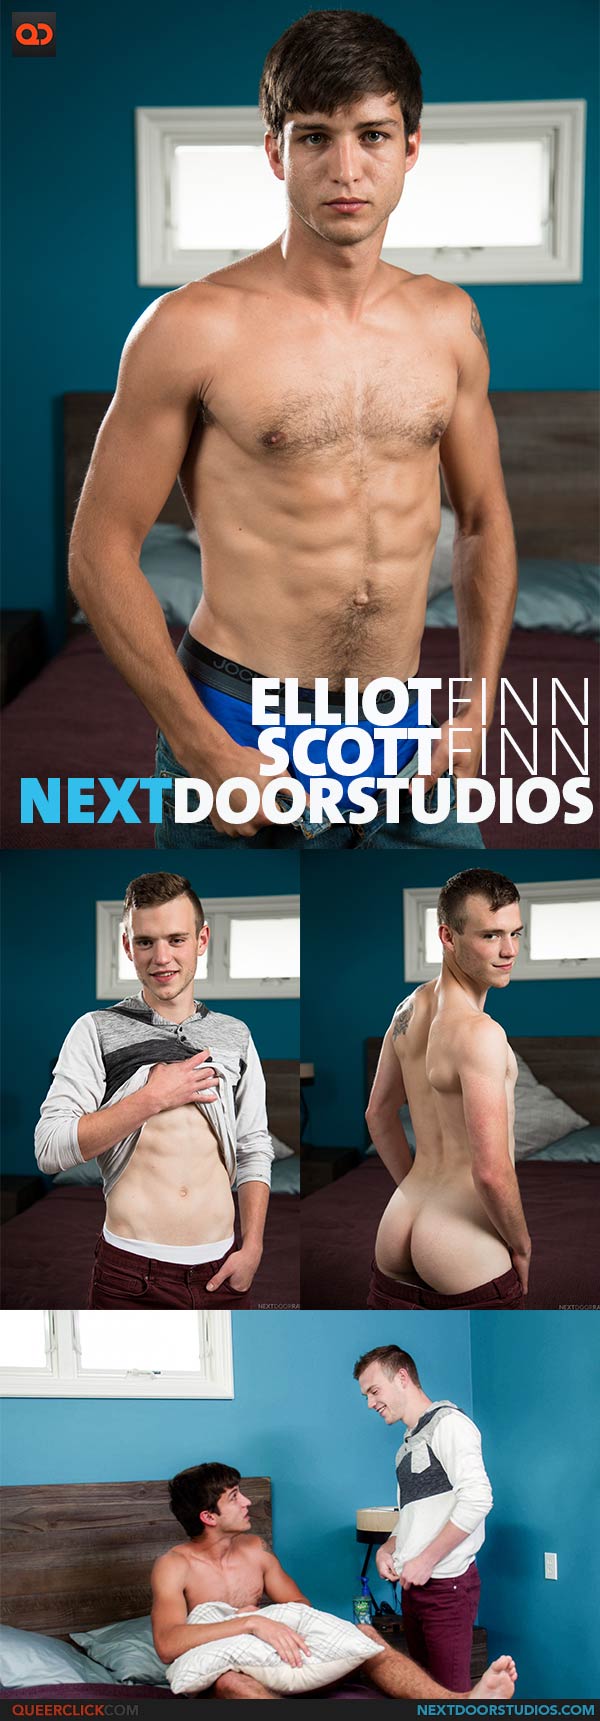 Next Door Studios:  Scott Finn and Elliot Finn